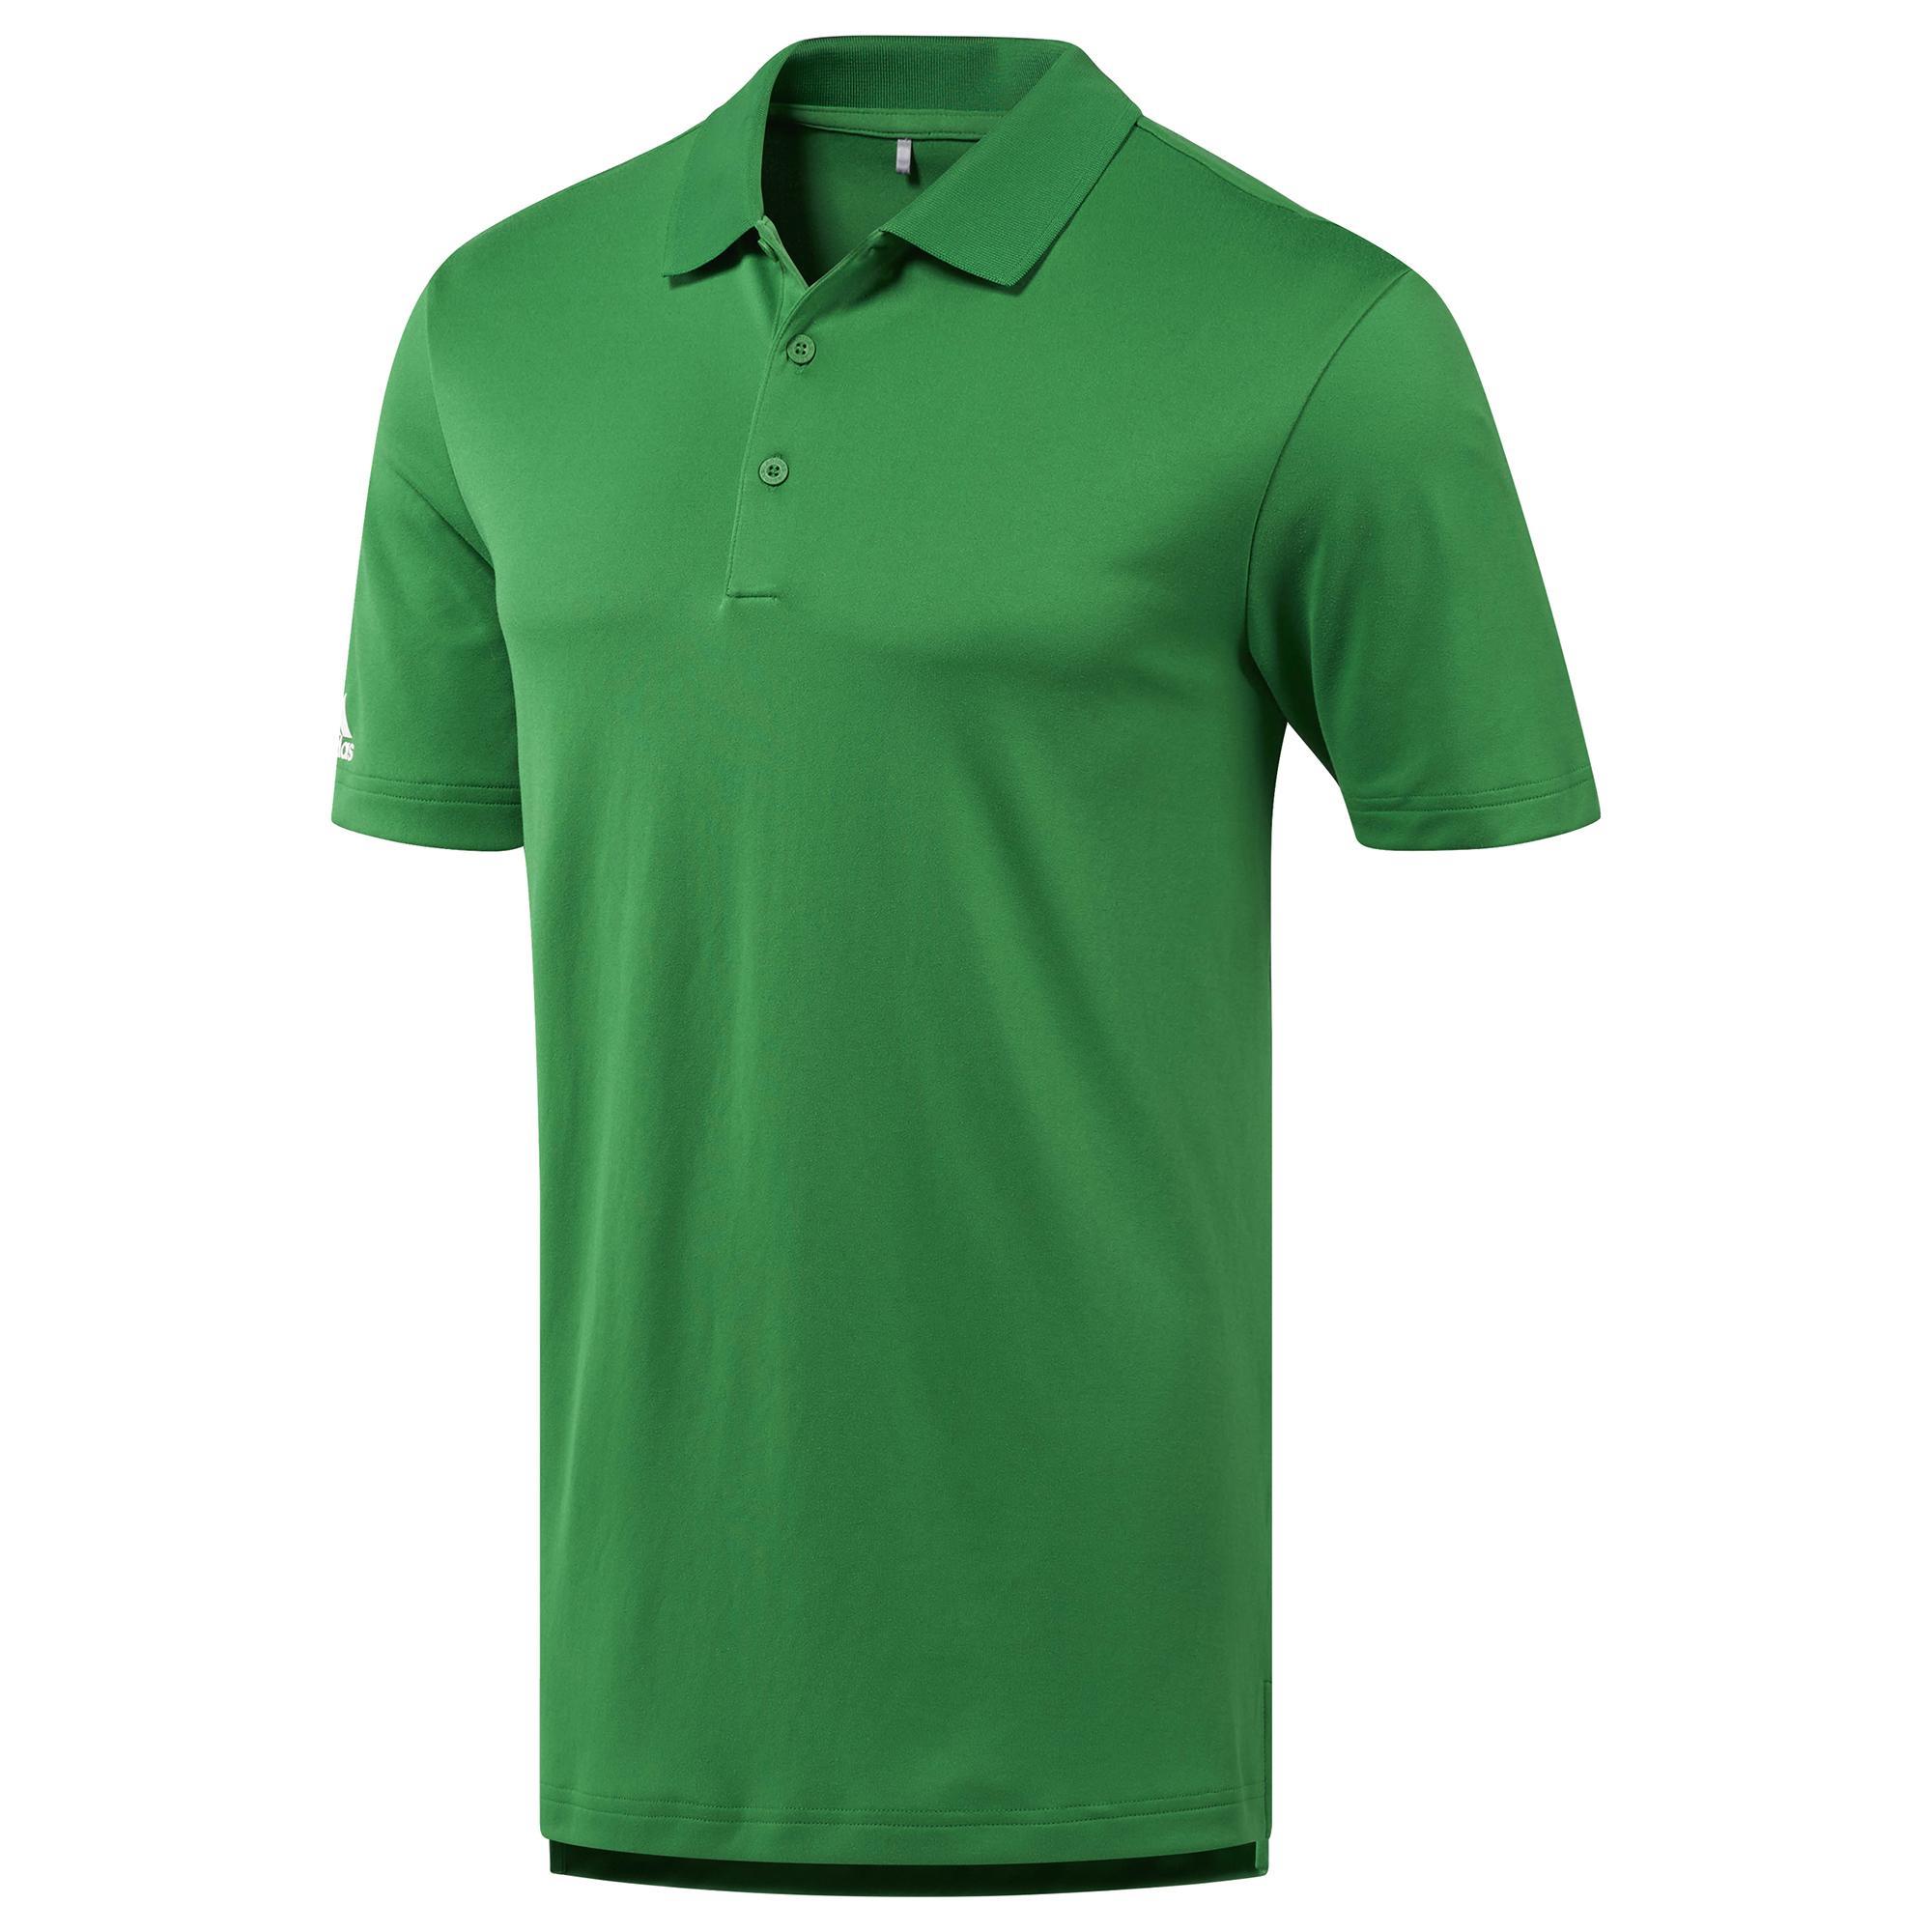 Adidas Mens Performance Polo Shirt (Green) (XS)